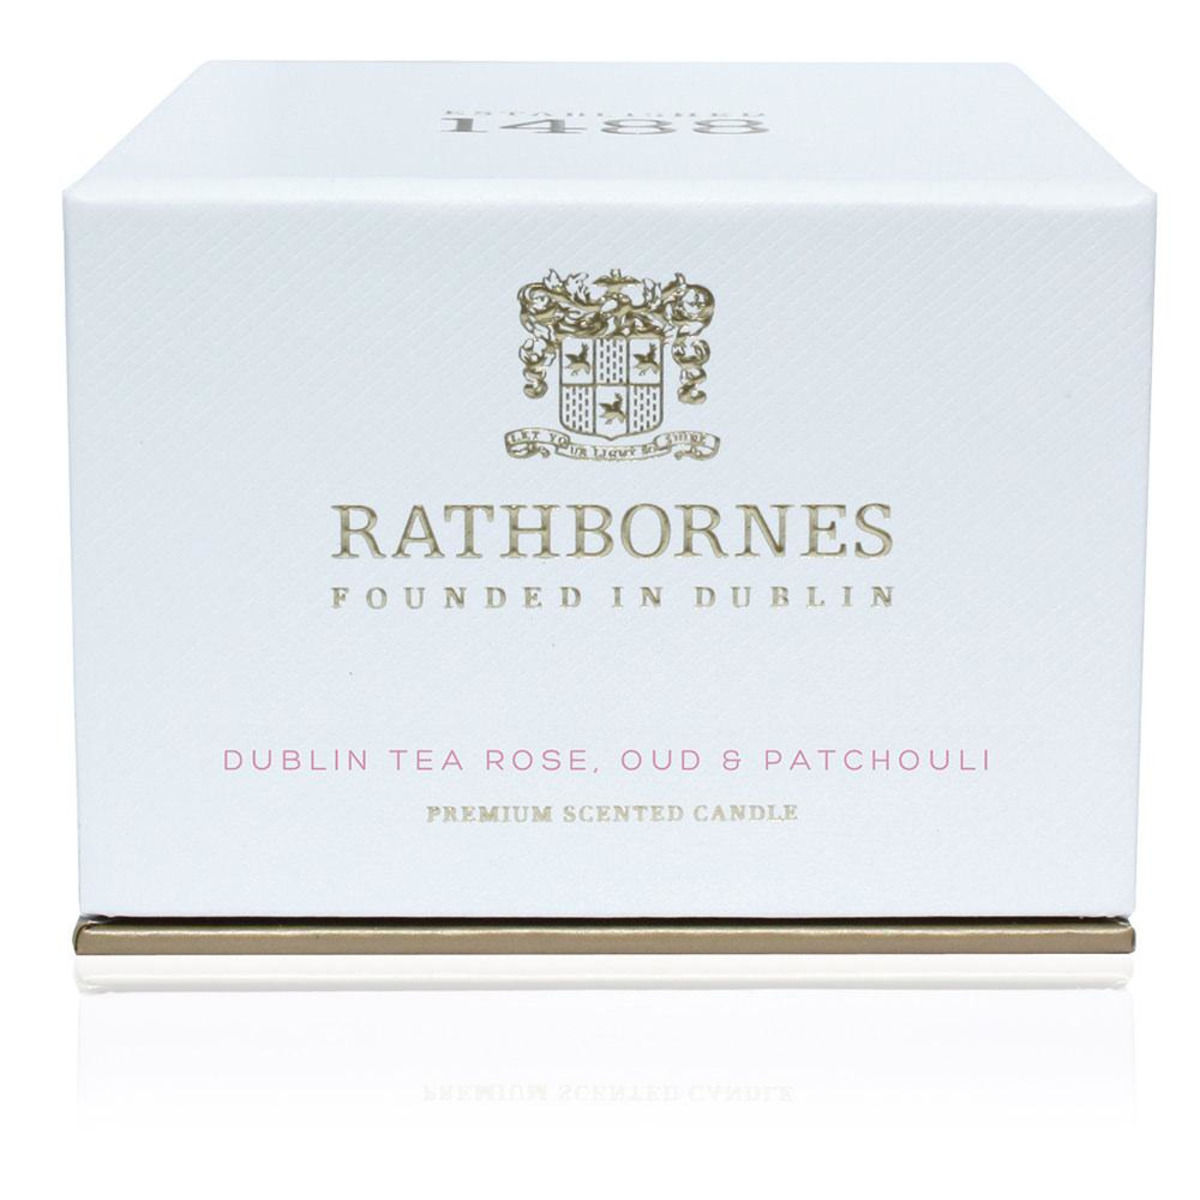 Dublin Tea Rose Oud & Patchouli Scented Luxury Candle